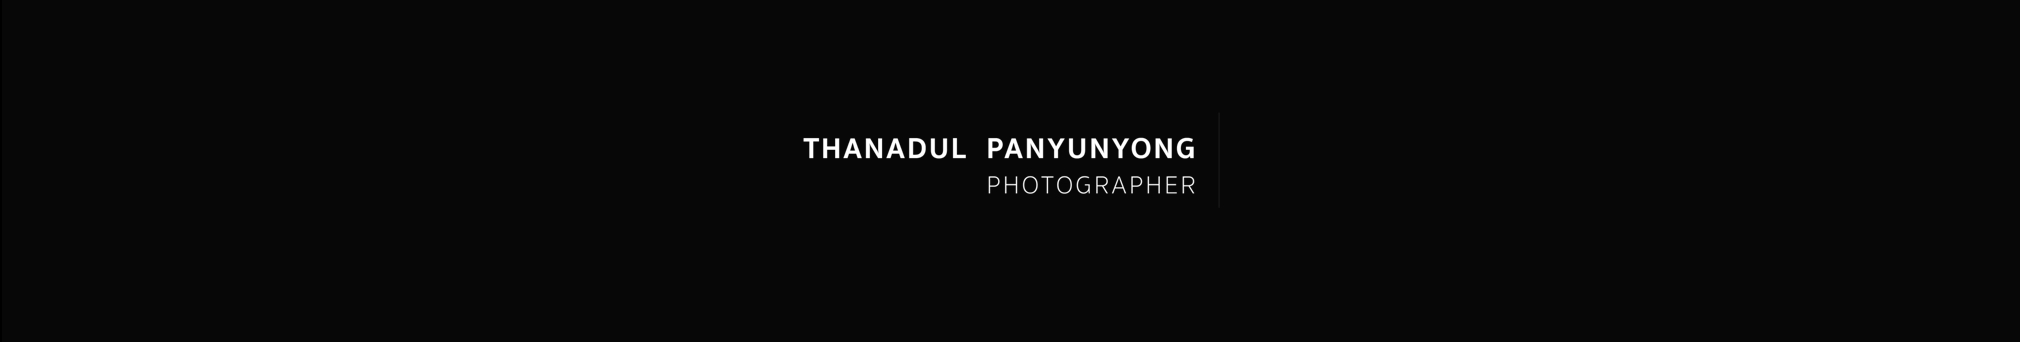 Баннер профиля Thanadul Panyunyong